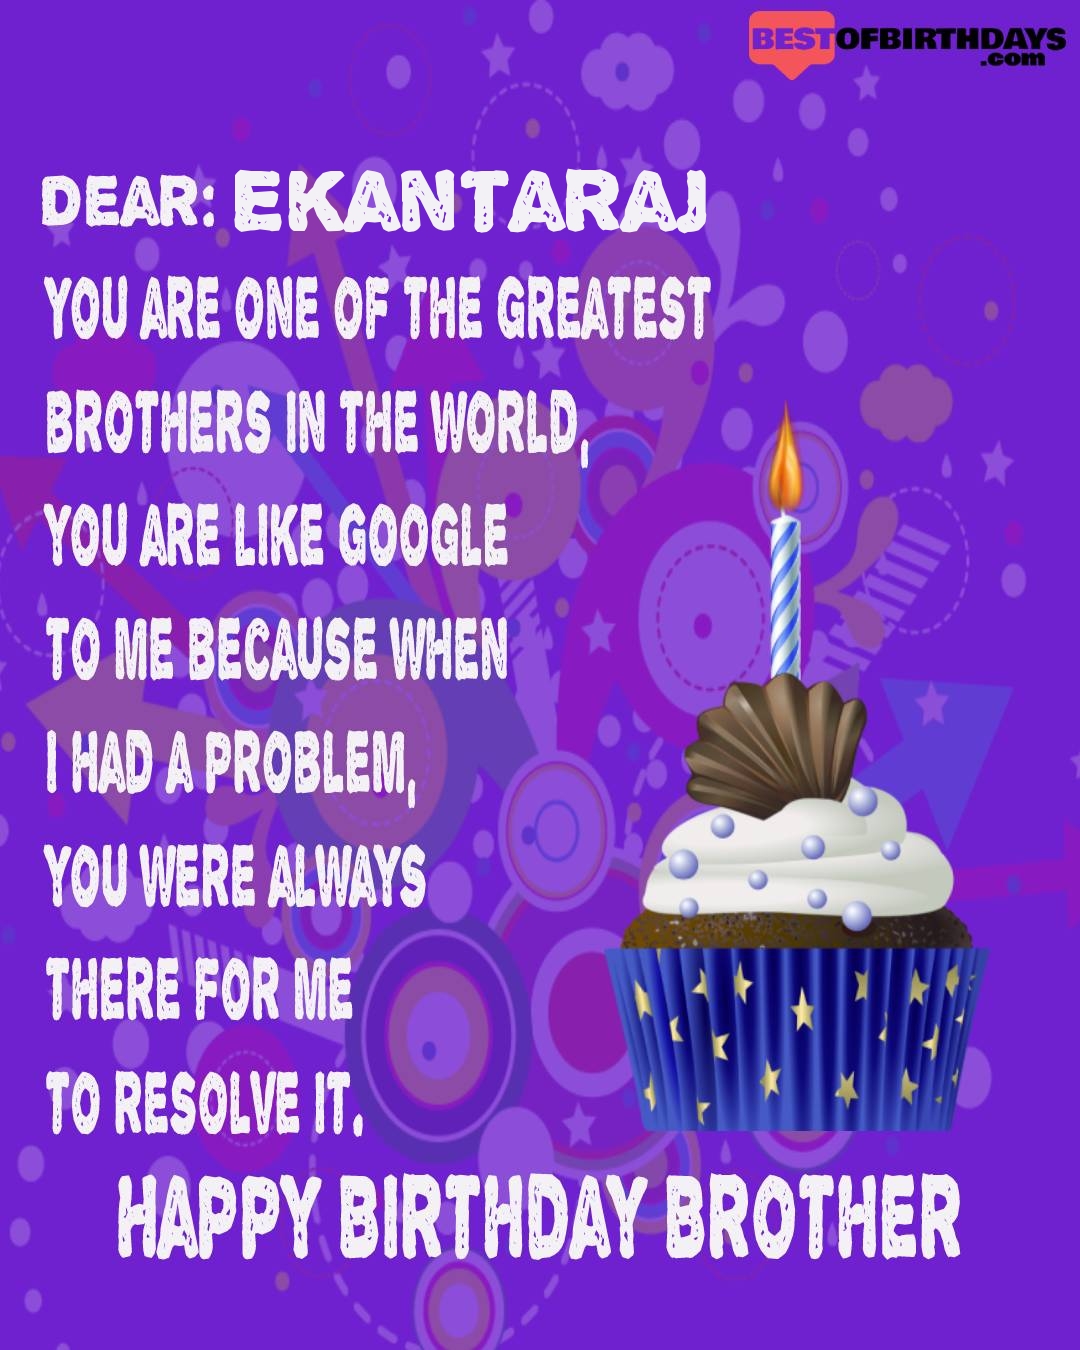 Happy birthday ekantaraj bhai brother bro